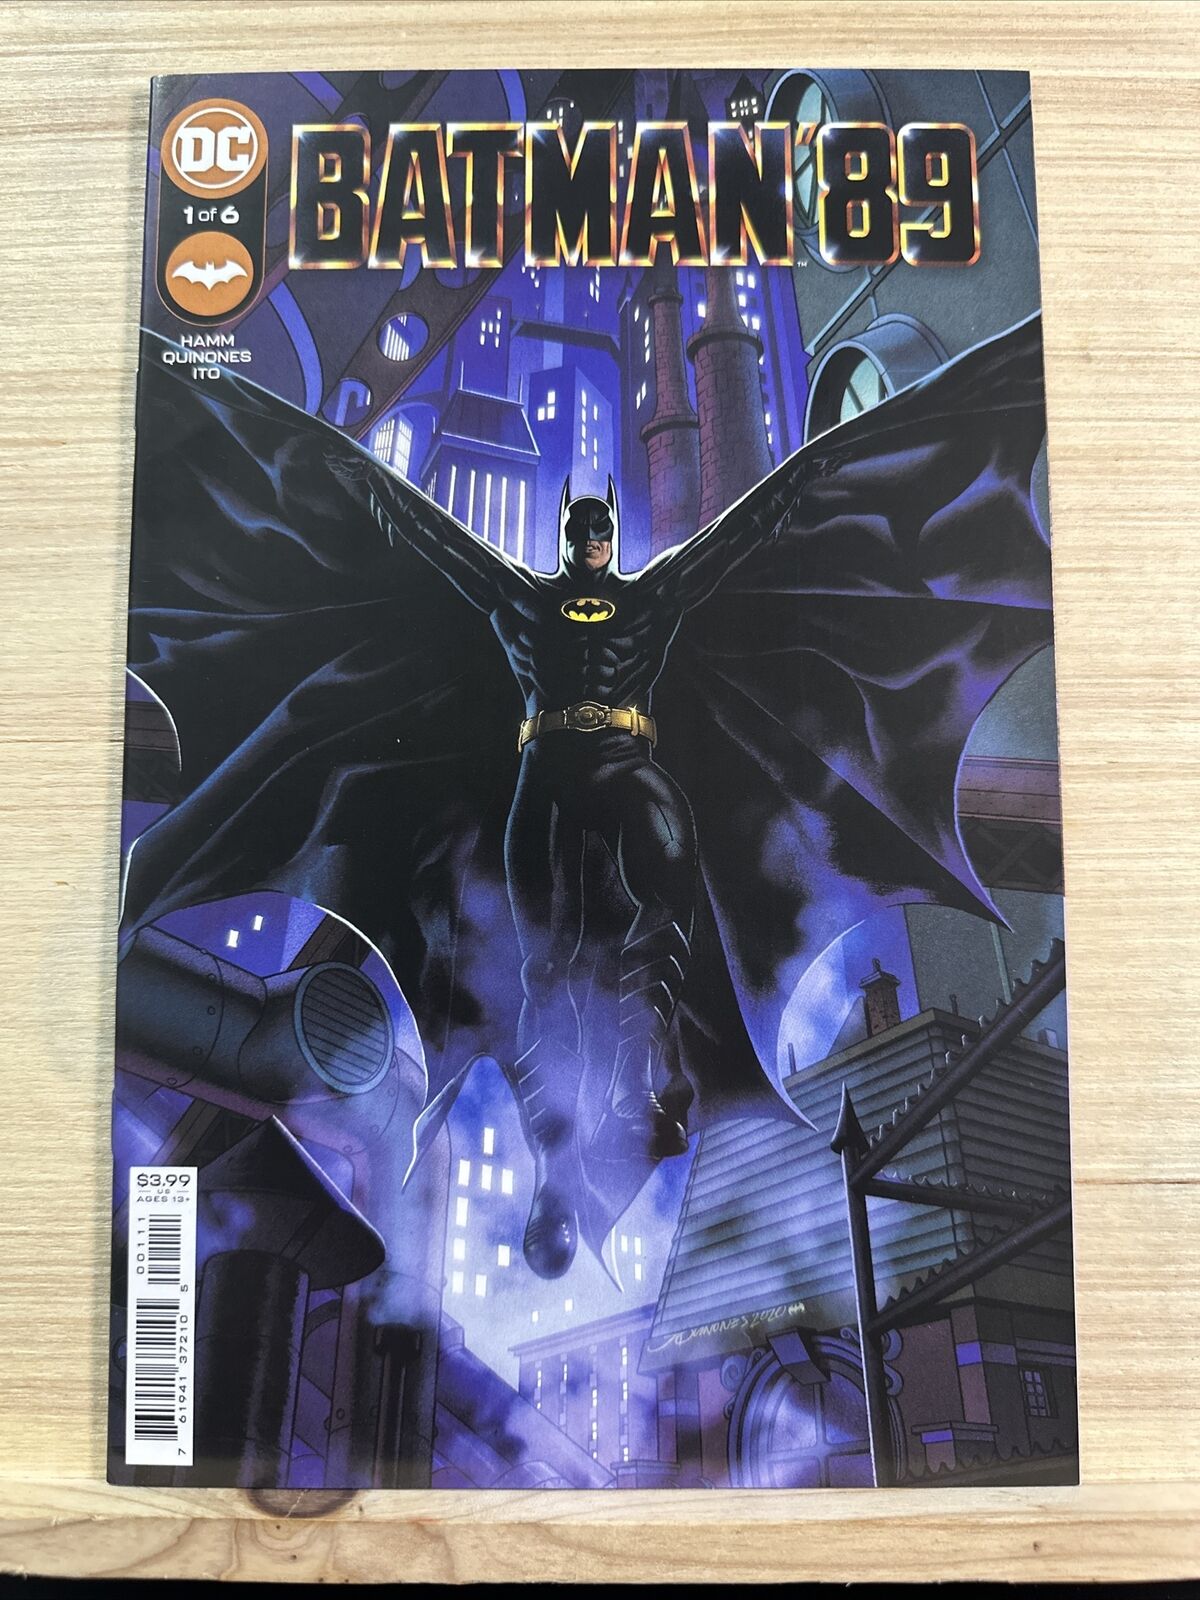 Batman ‘89 (2021) Issue #1 Key Issue Near Mint